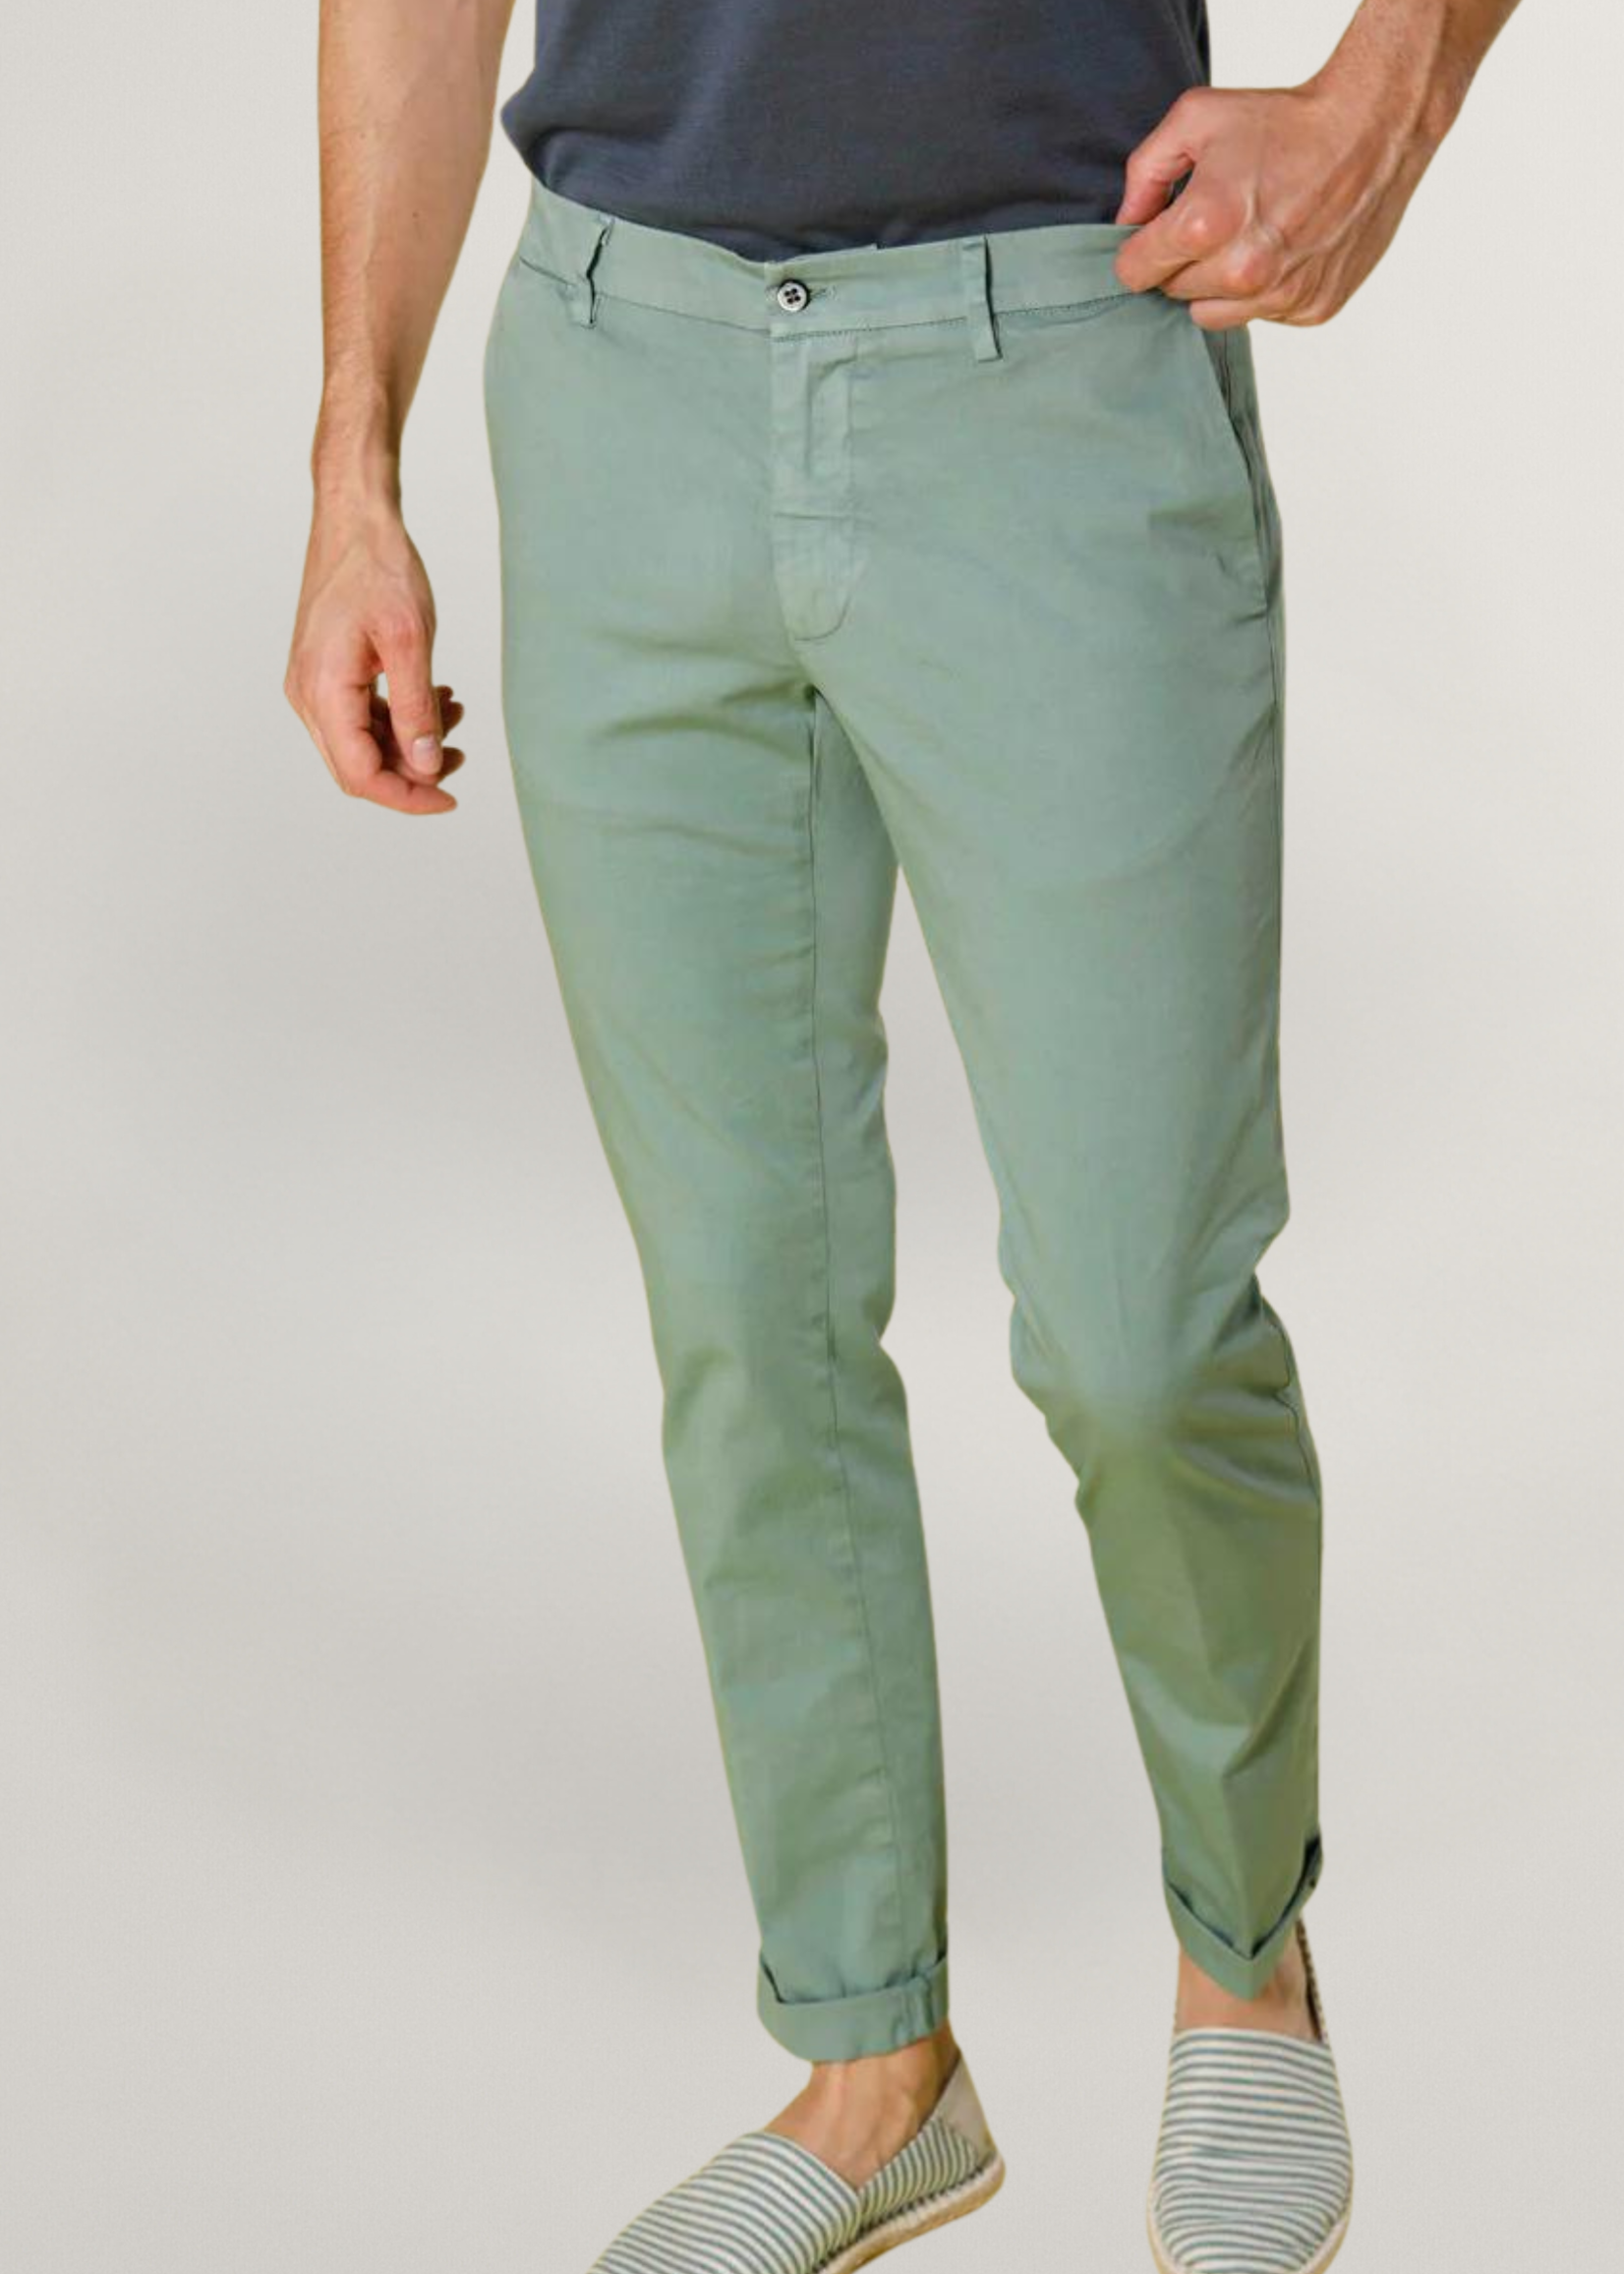 MASON'S Torino Style Pantalon chino homme en satin stretch Slim fit - Vert menthe